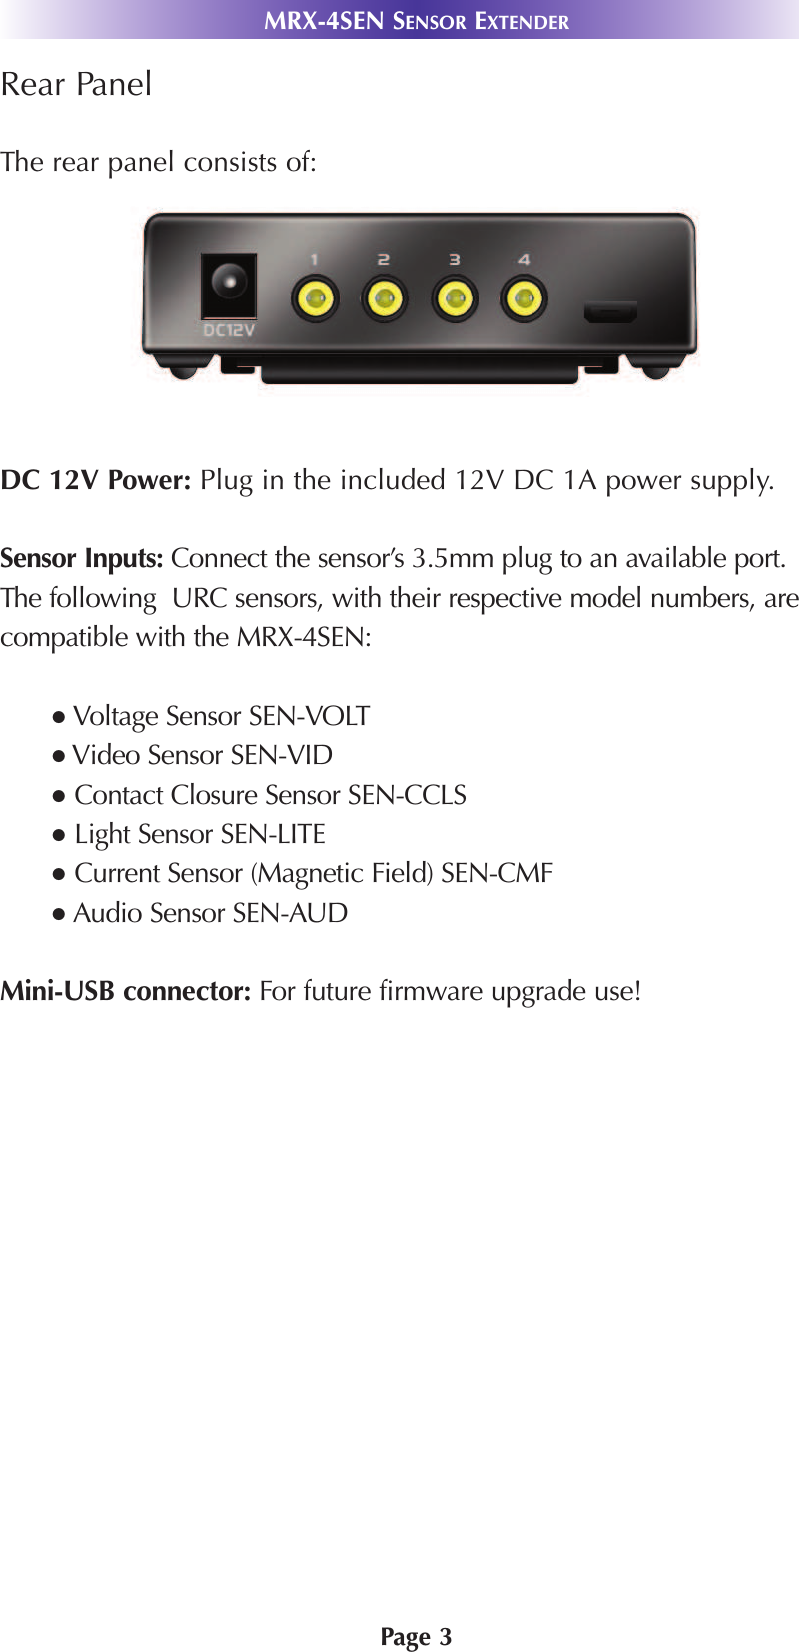 Page 3Rear PanelThe rear panel consists of:DC 12V Power: Plug in the included 12V DC 1A power supply. Sensor Inputs: Connect the sensor’s 3.5mm plug to an available port.The following  URC sensors, with their respective model numbers, arecompatible with the MRX-4SEN:● Voltage Sensor SEN-VOLT●Video Sensor SEN-VID●Contact Closure Sensor SEN-CCLS●Light Sensor SEN-LITE●Current Sensor (Magnetic Field) SEN-CMF● Audio Sensor SEN-AUD Mini-USB connector: For future firmware upgrade use!MRX-4SEN SENSOR EXTENDER